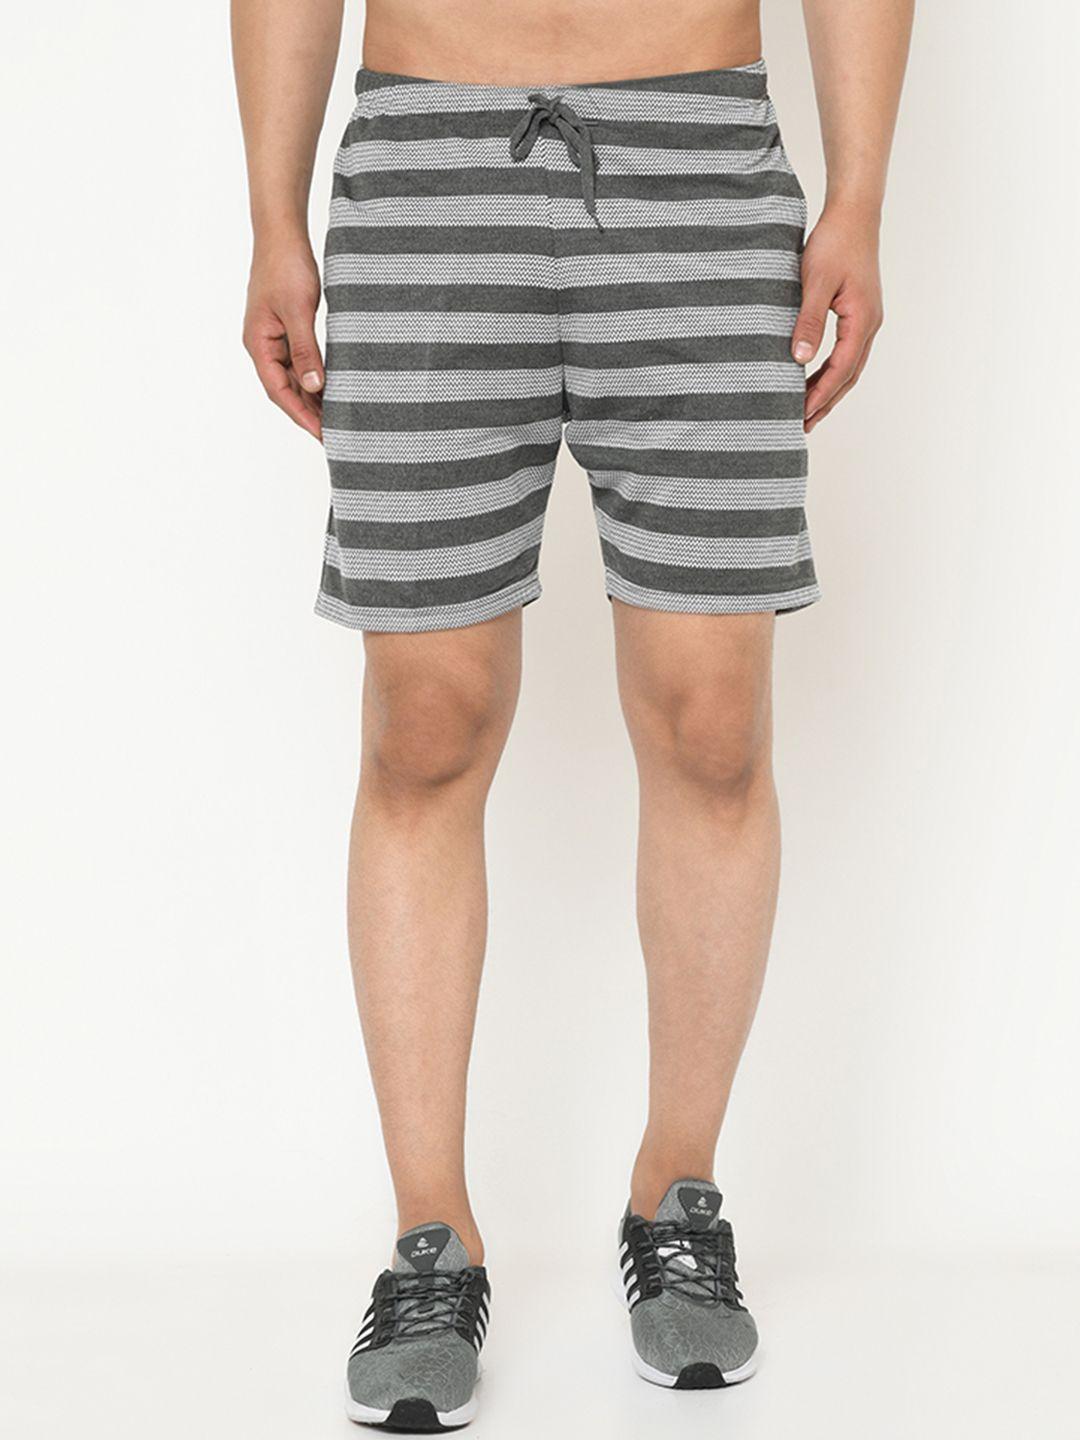 vimal jonney men grey & white striped regular shorts